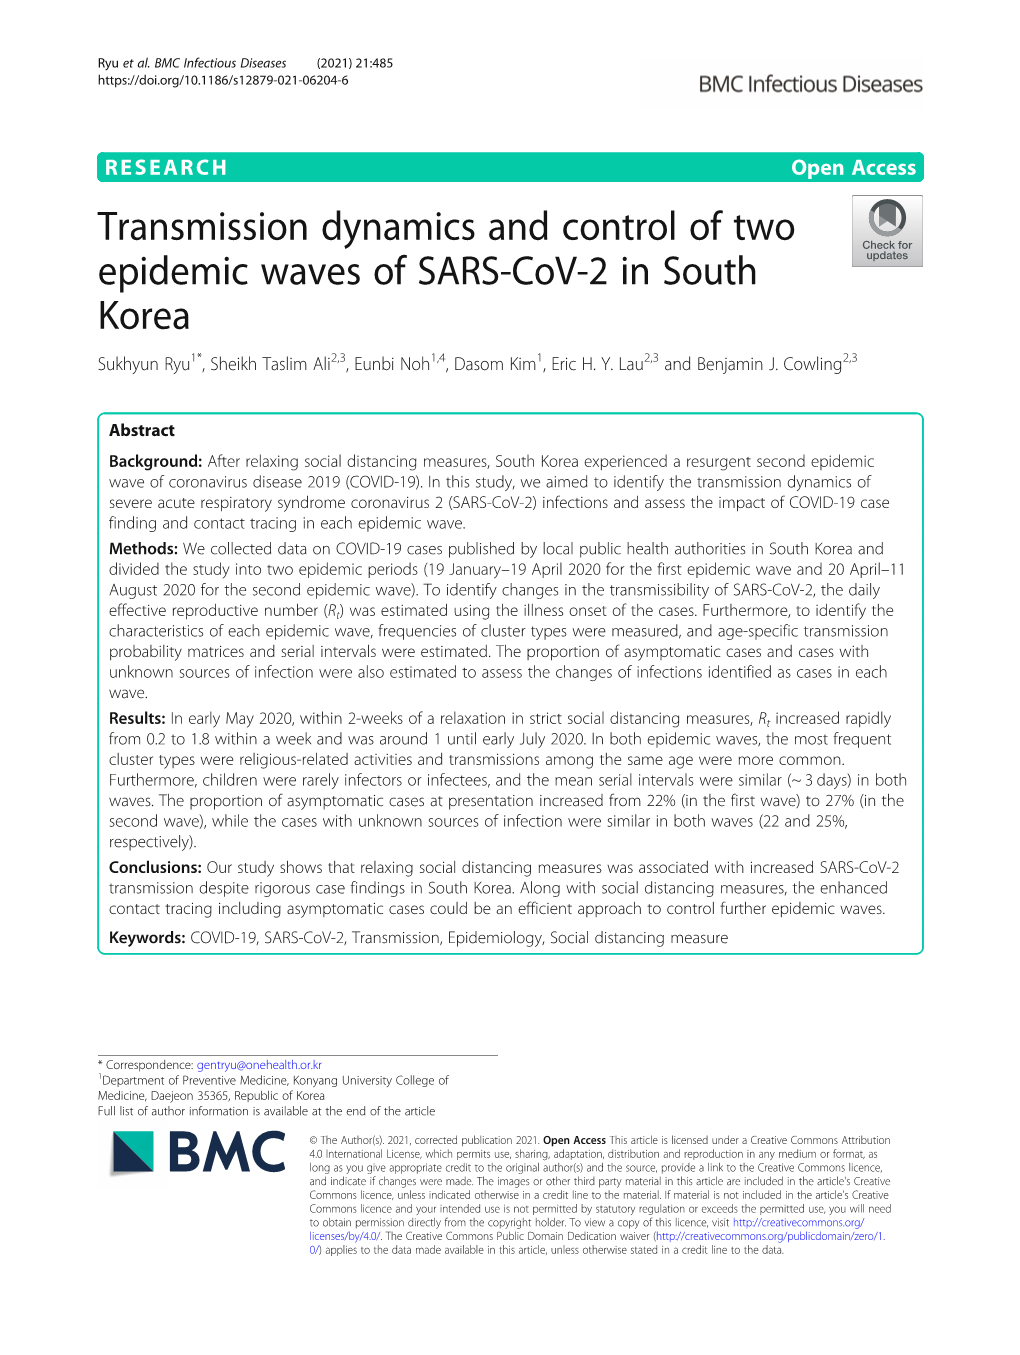 Transmission Dynamics and Control of Two Epidemic Waves of SARS-Cov-2 in South Korea Sukhyun Ryu1*, Sheikh Taslim Ali2,3, Eunbi Noh1,4, Dasom Kim1, Eric H